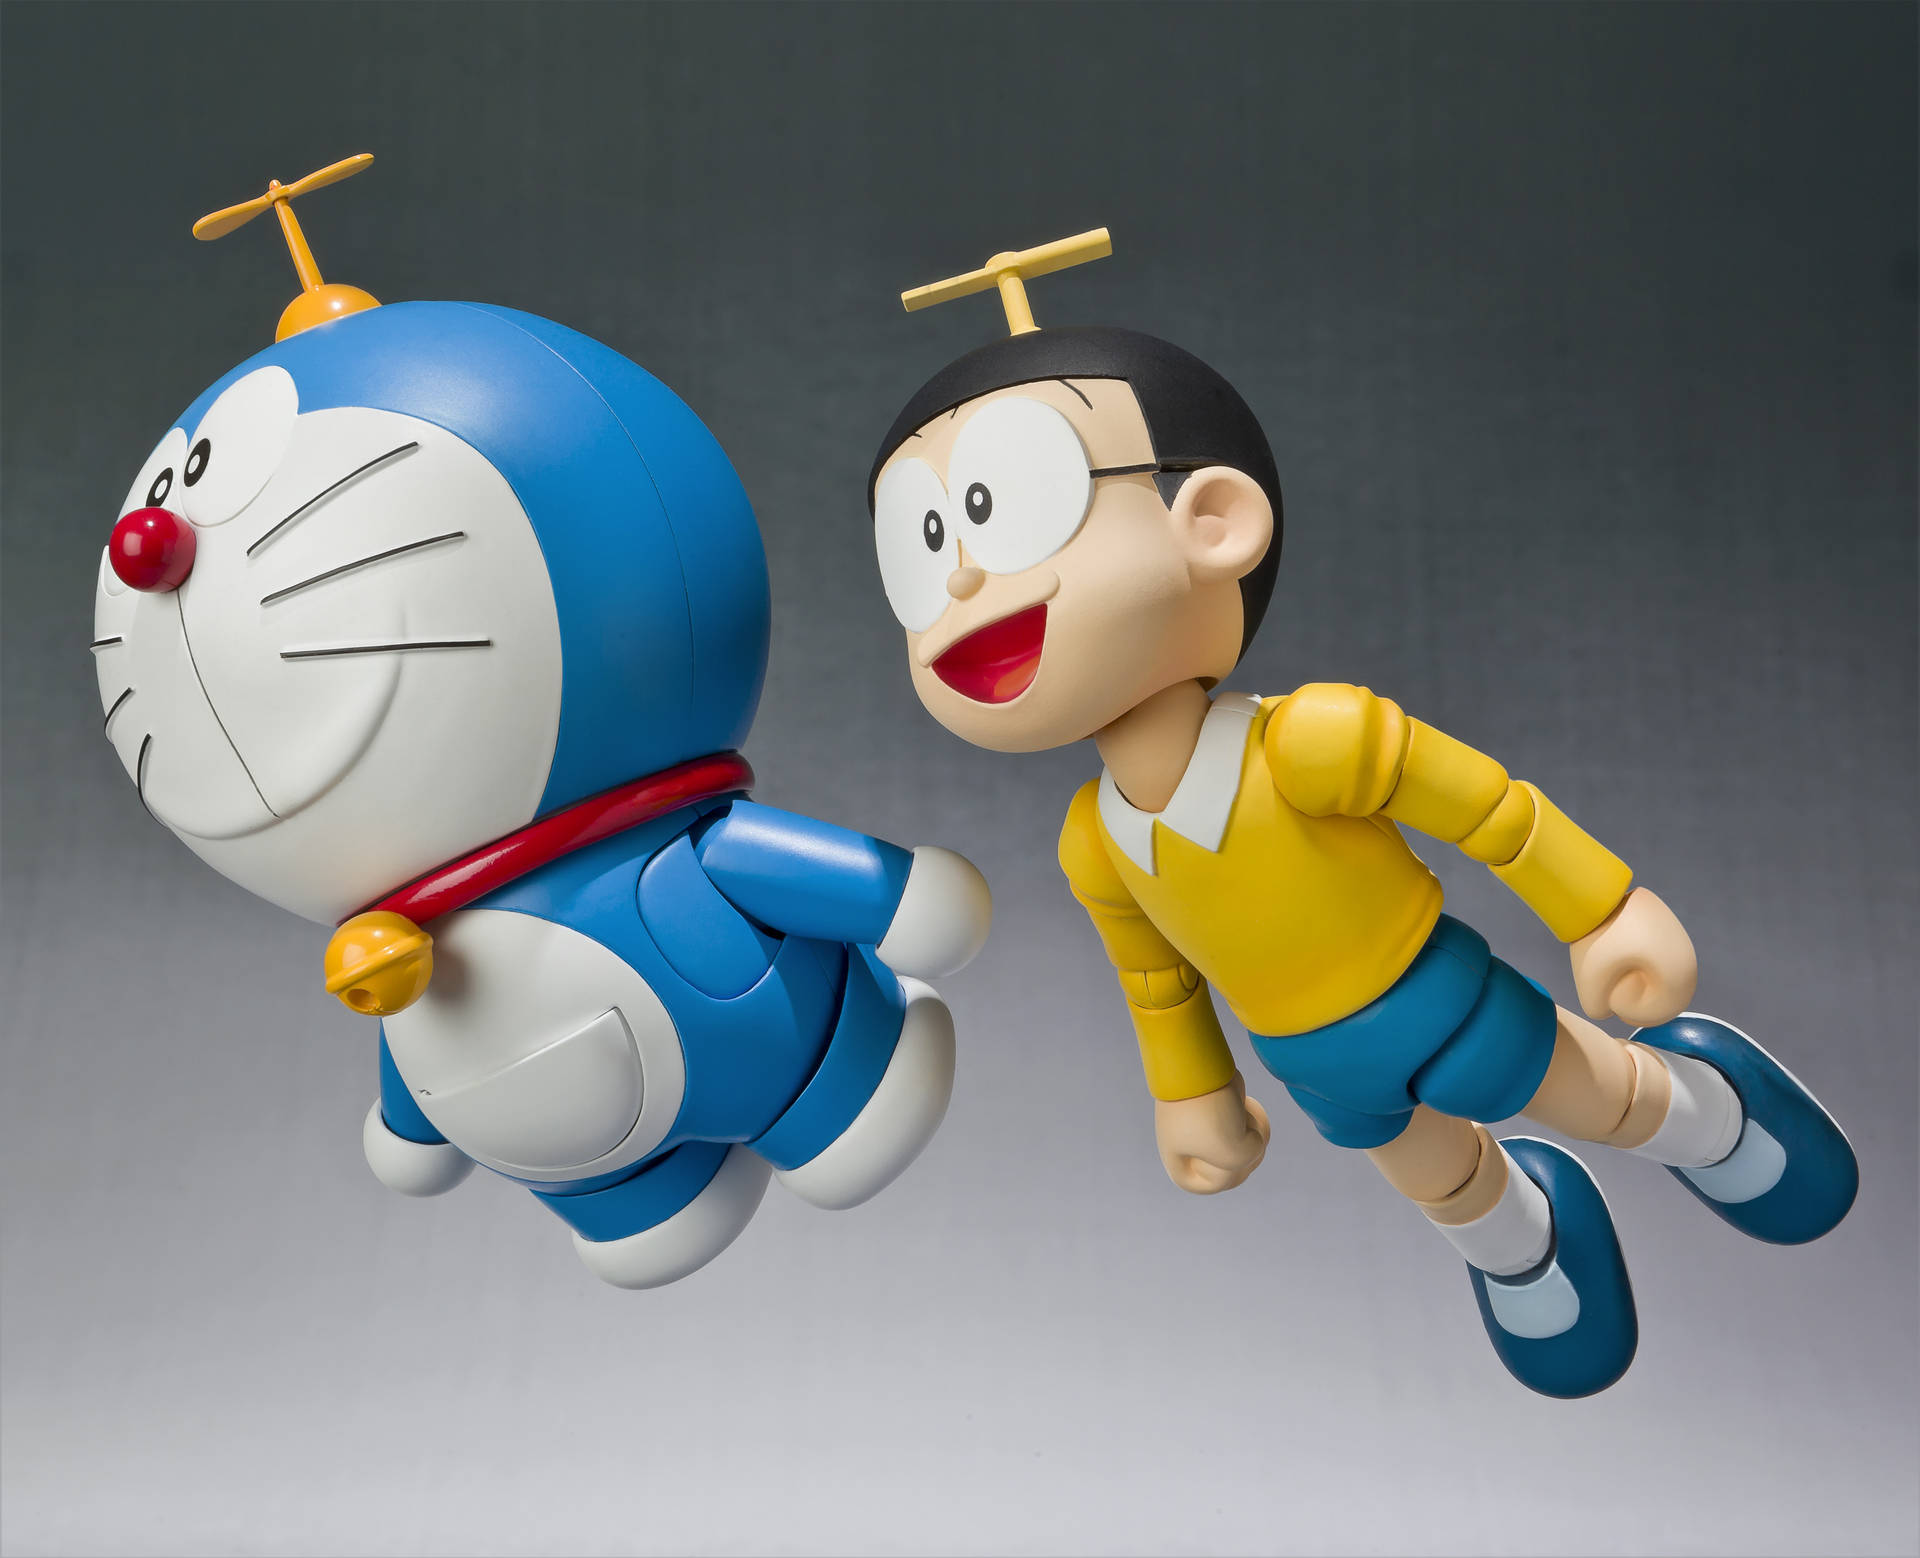 Action Figures Of Nobita Nobi And Doraemon 4k Background